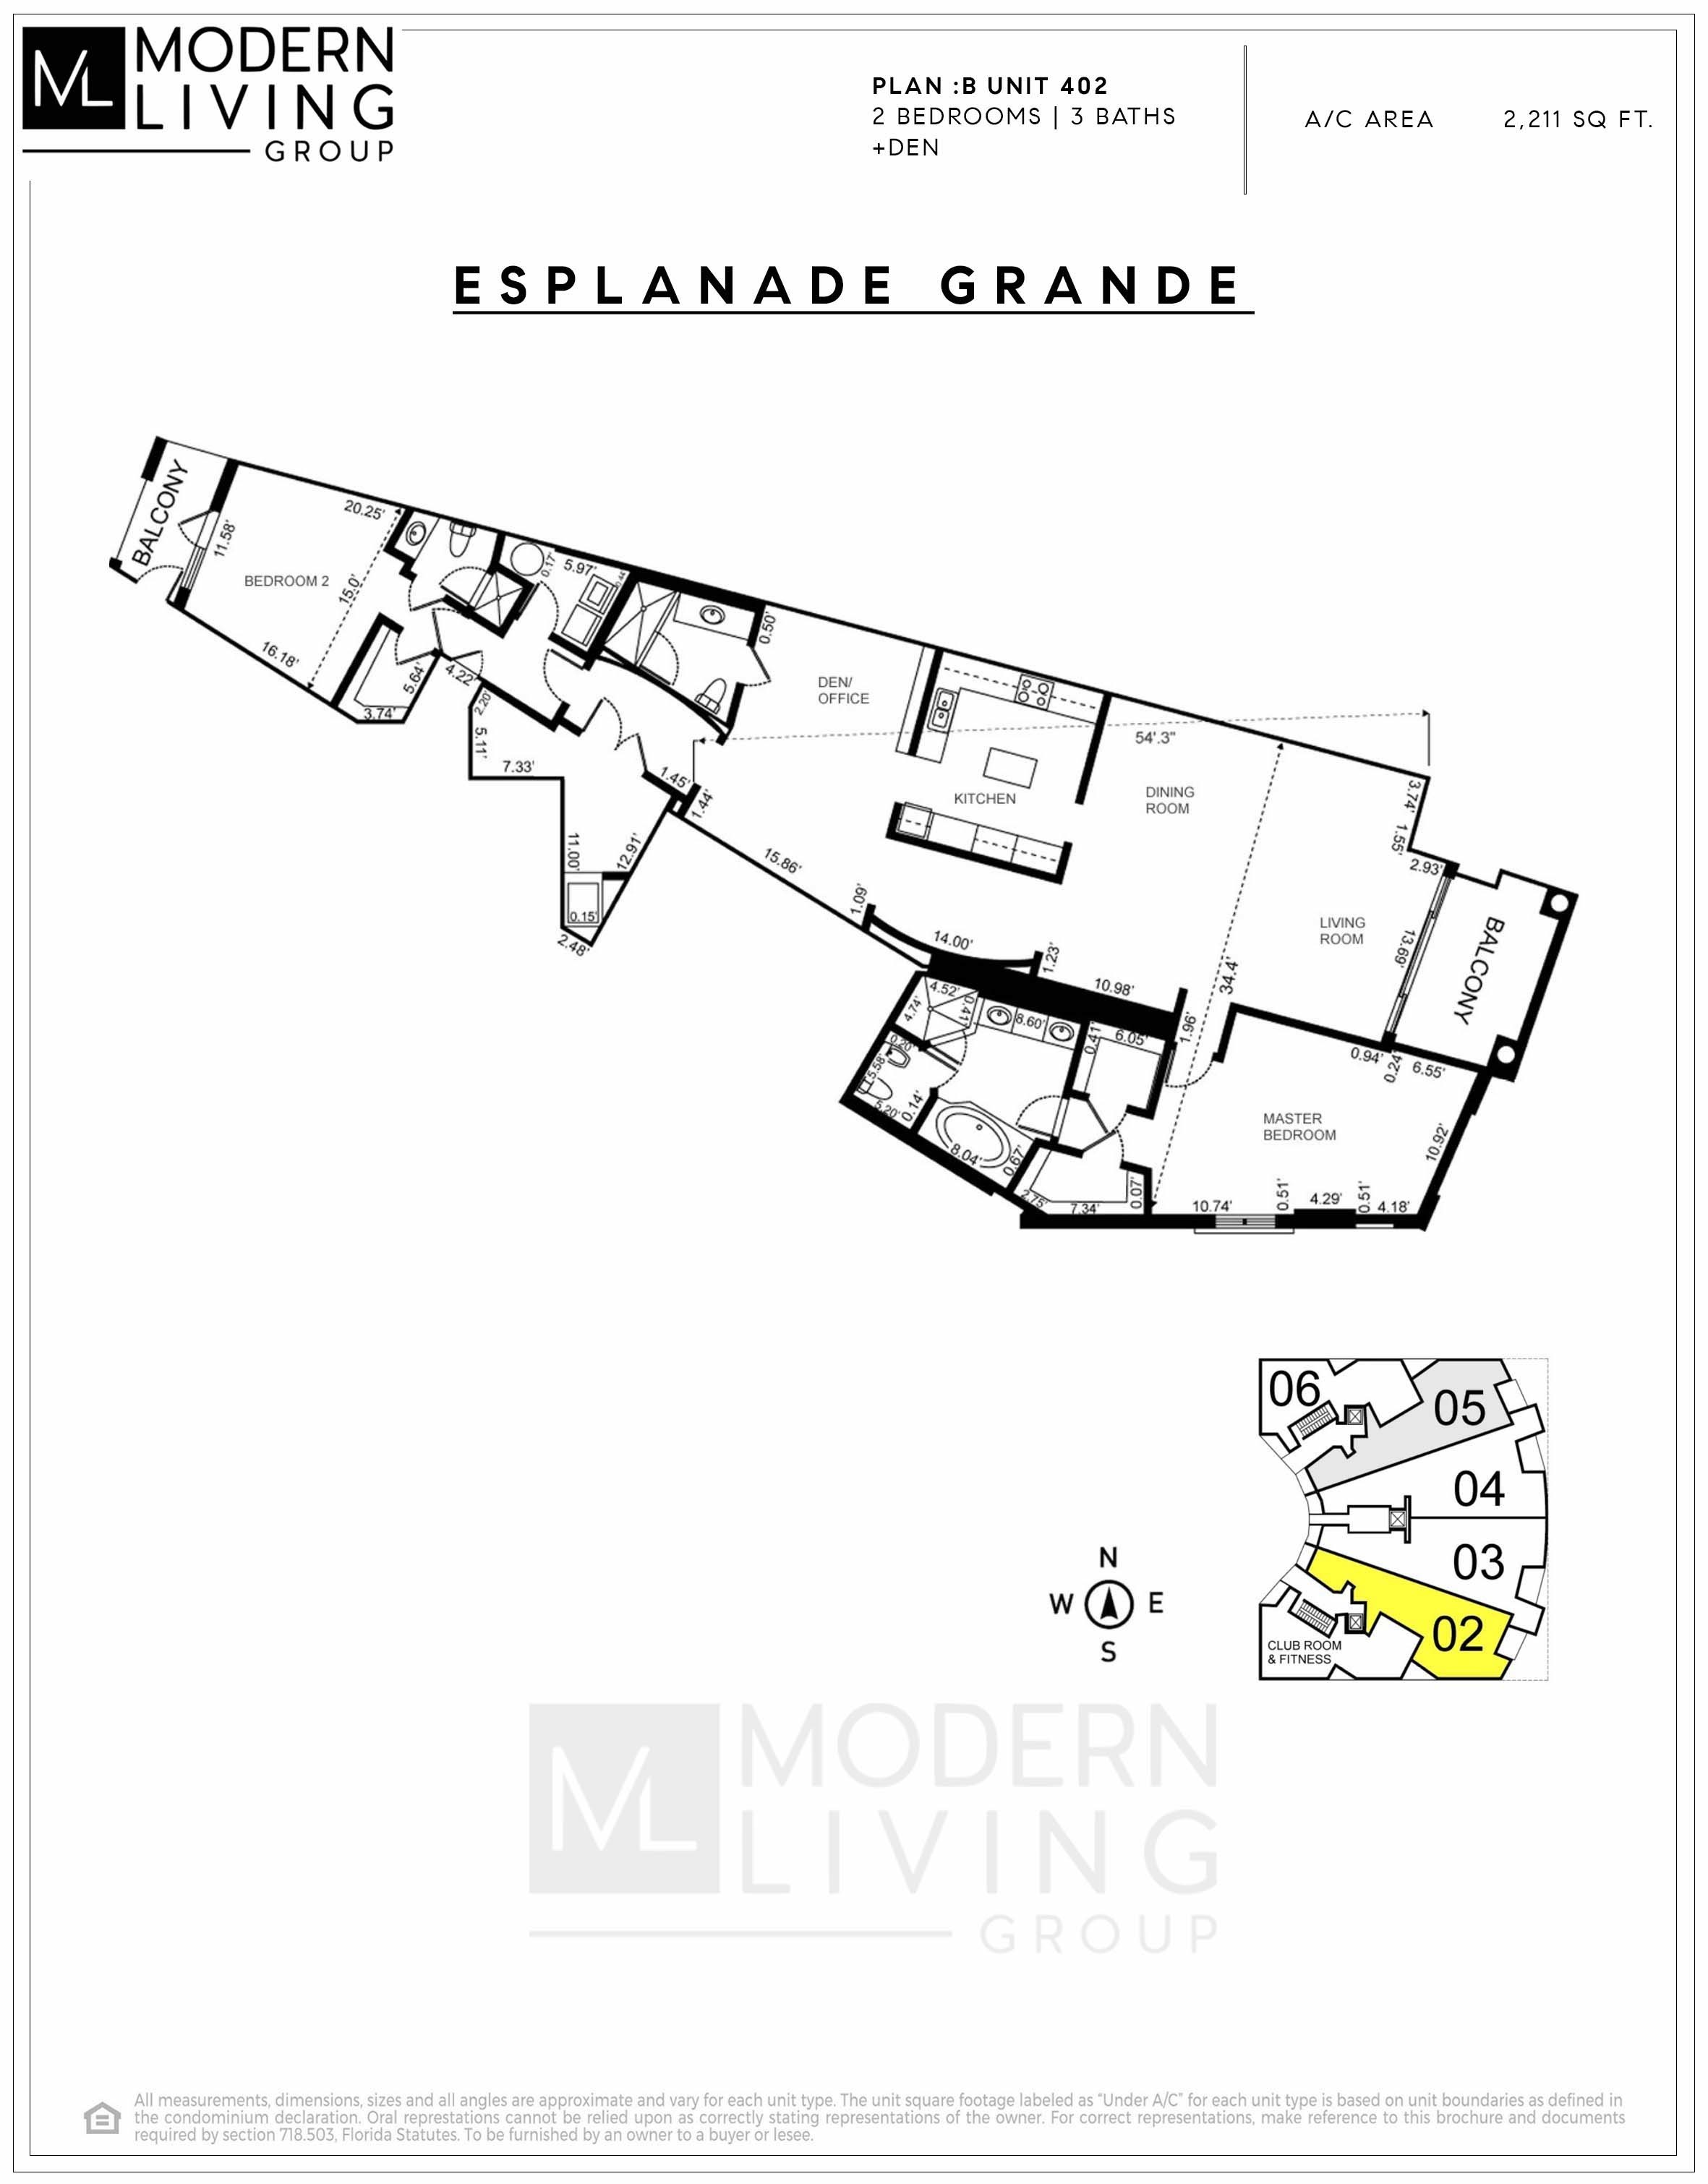 Floor Plan for Esplanade Grande Floorplans, Type B Unit 402